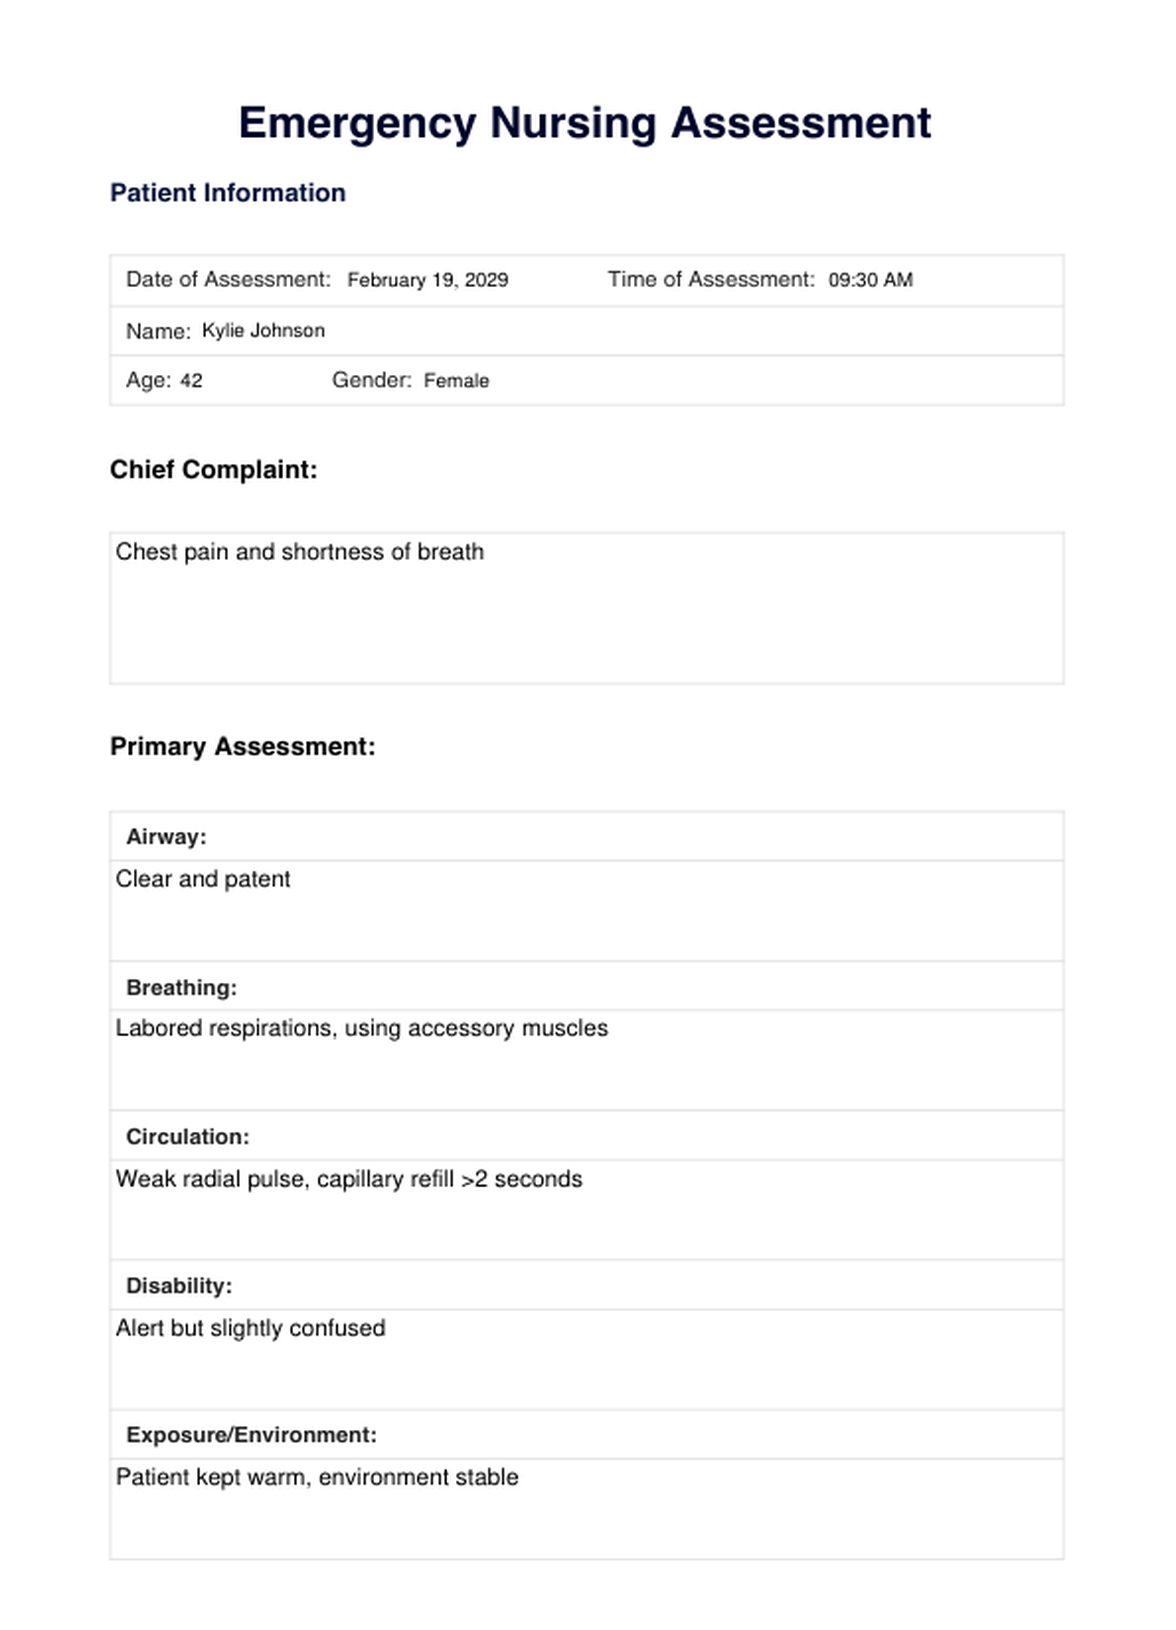 Emergency Nursing Assessment PDF Example